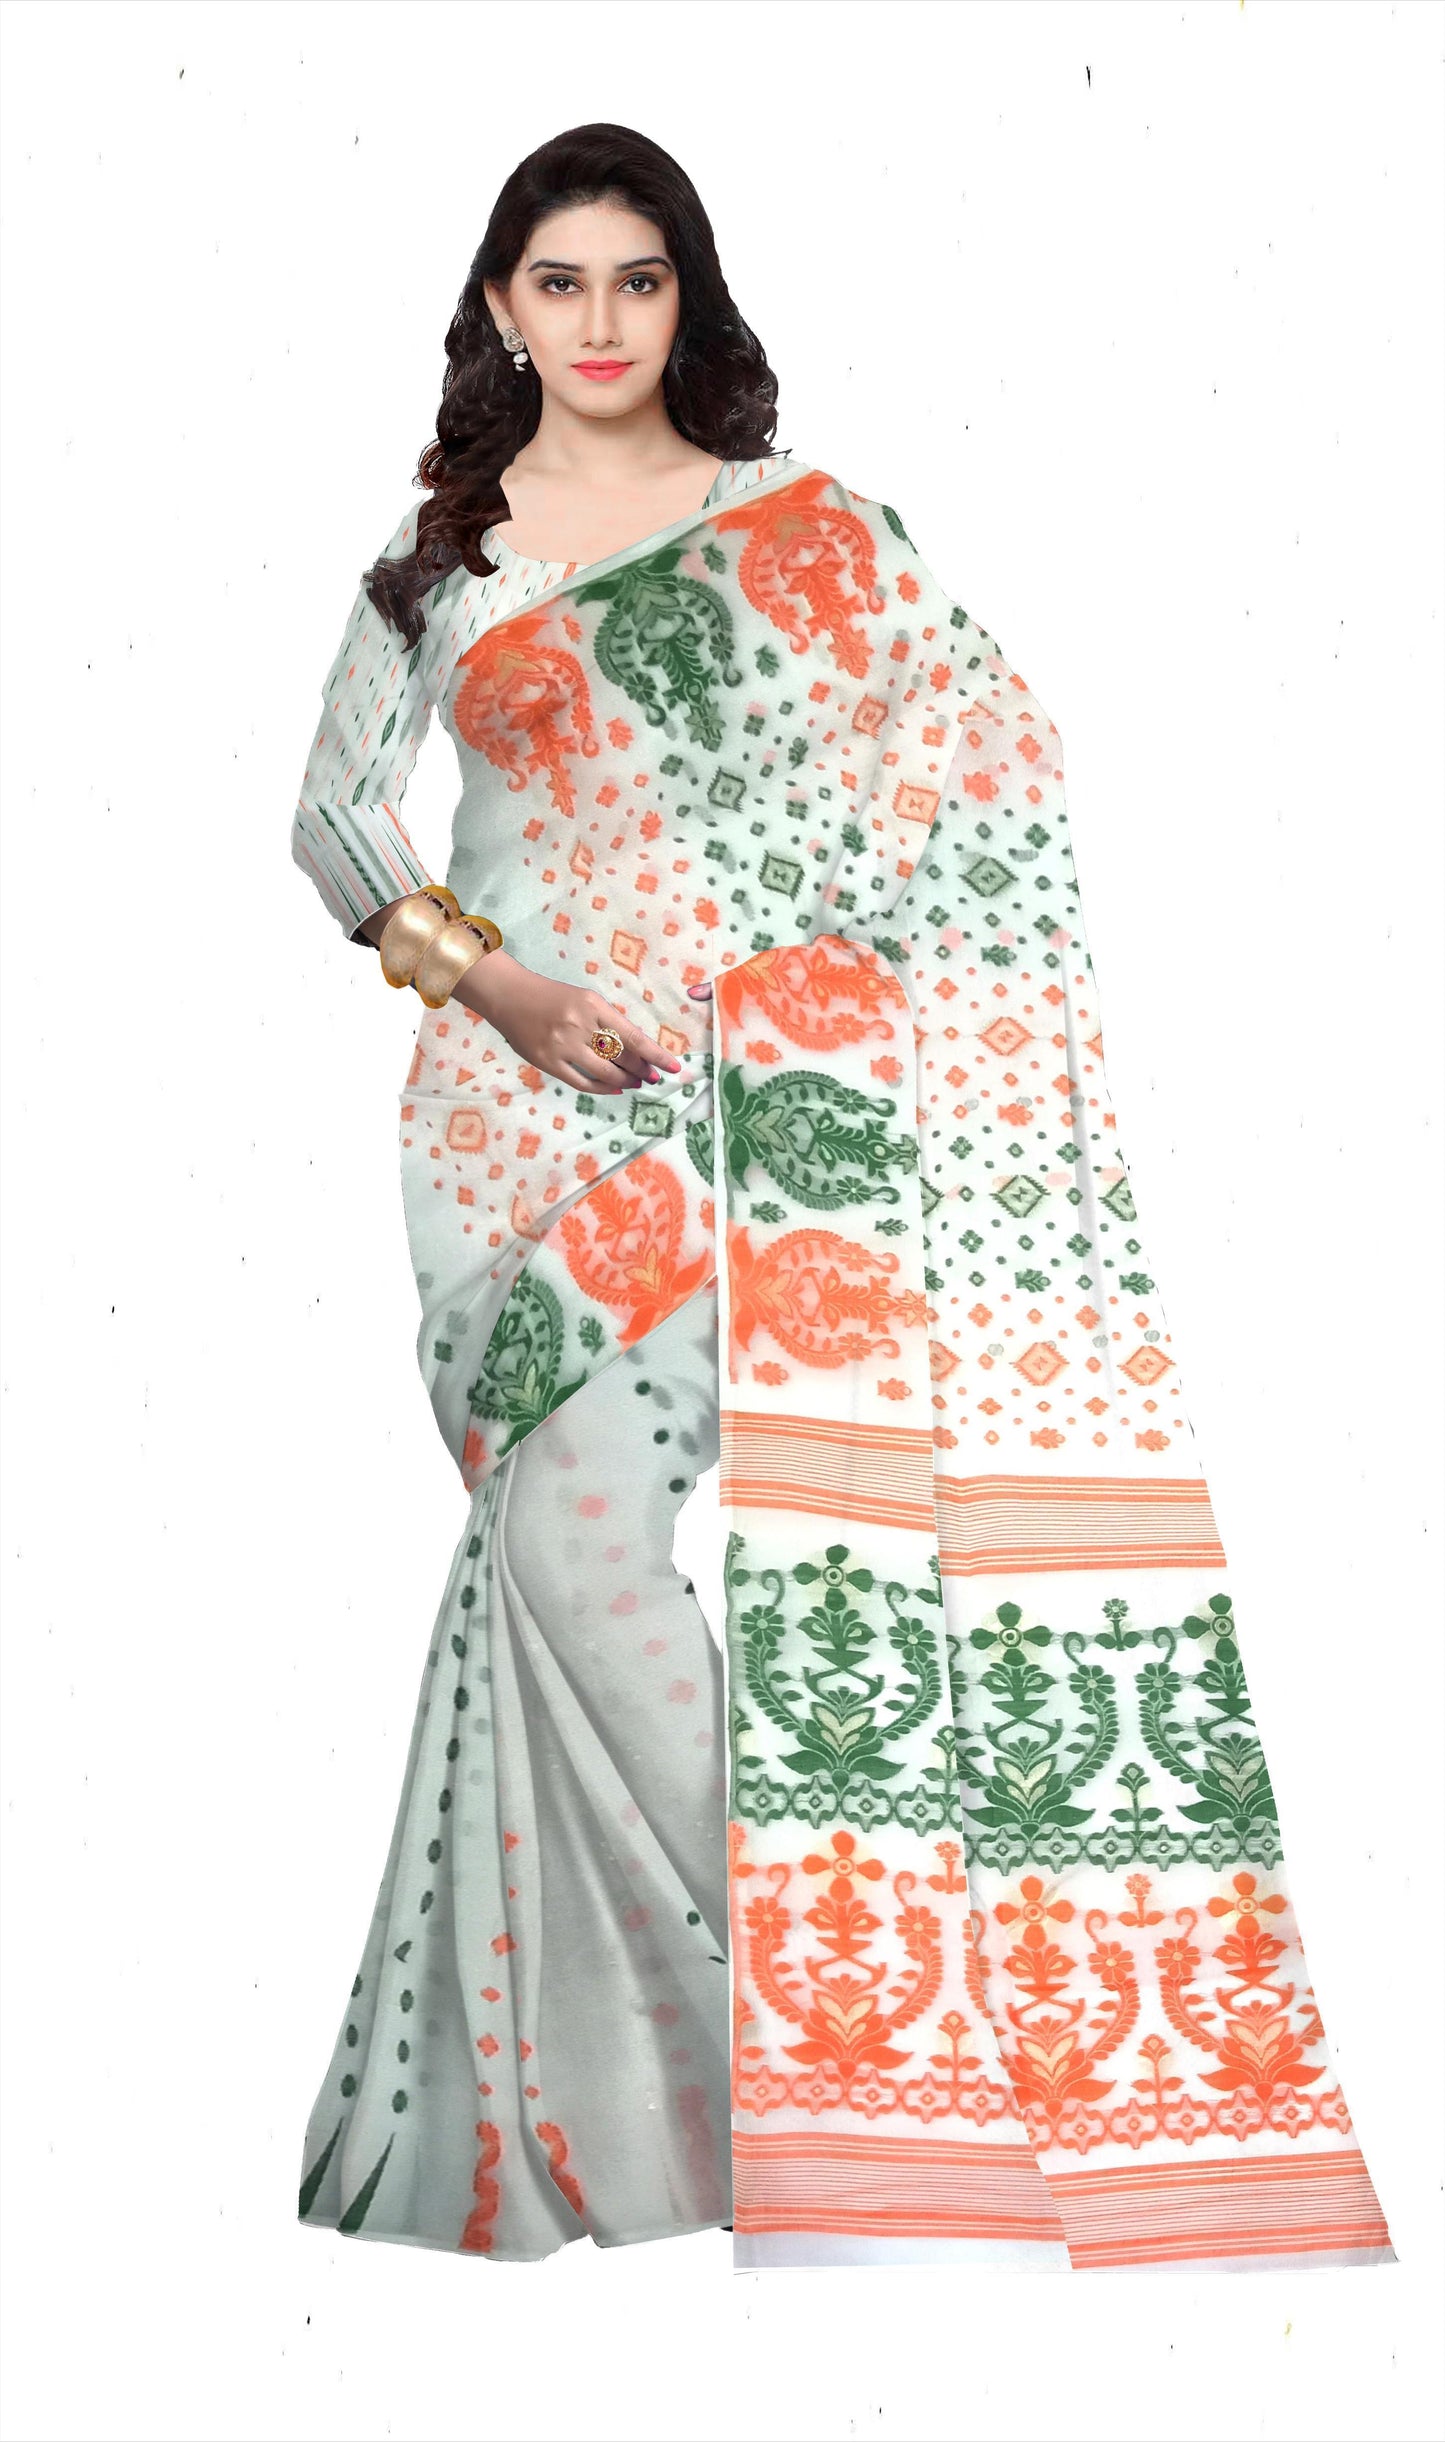 Pradip Fabrics Ethnic Woman's Tant All Over Dhakai off White Color Saree